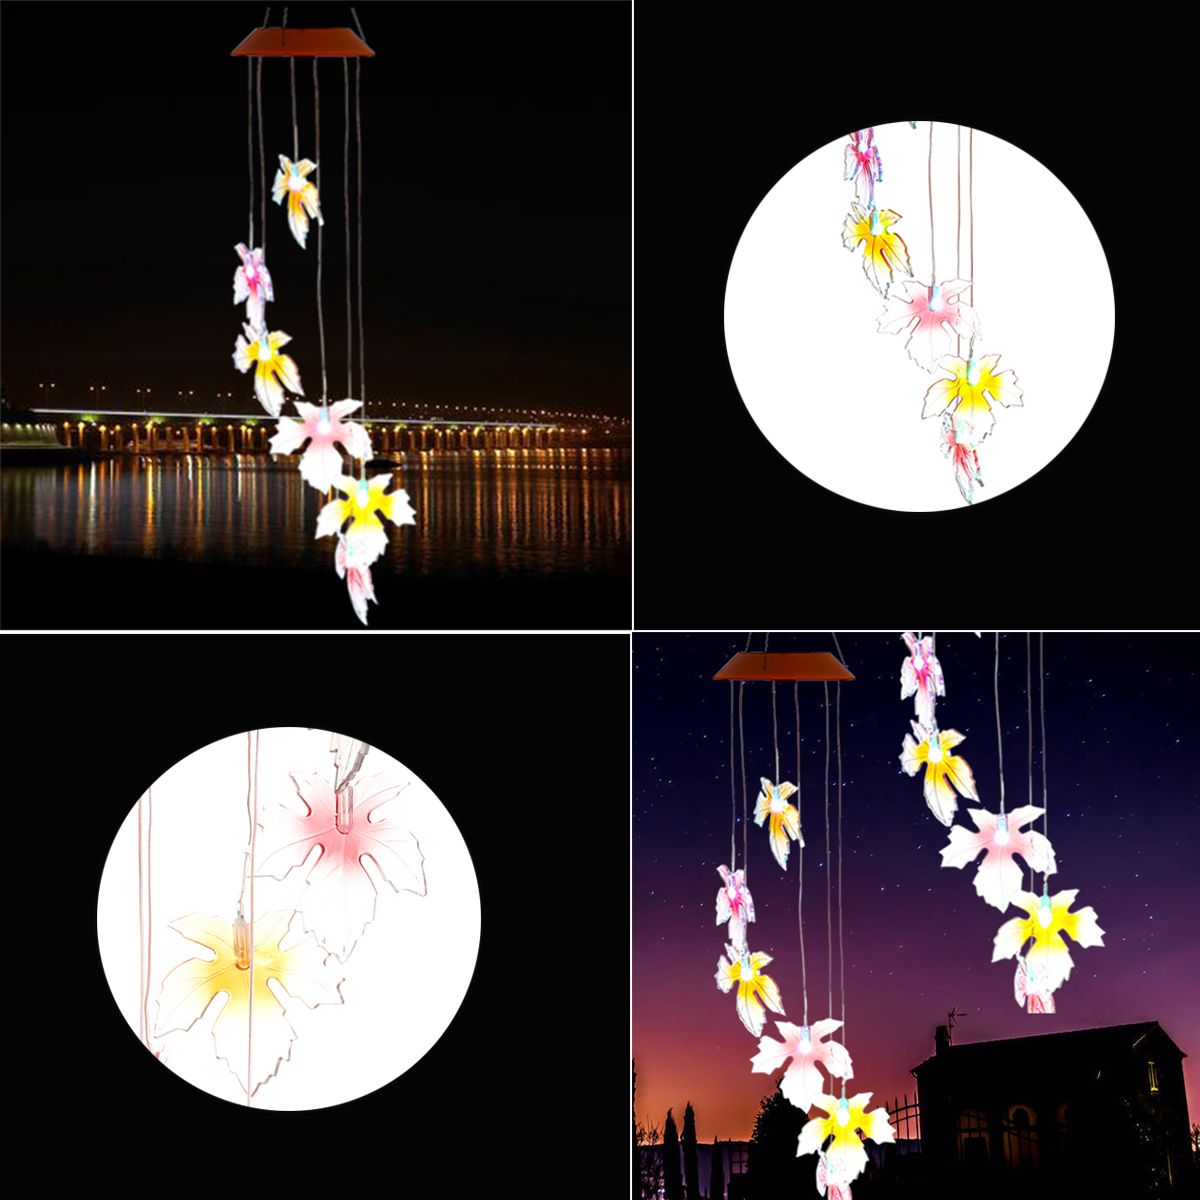 LED-Solar-Wind-Chime-Lamp-Colorful-Photosensitive-Chandelier-Garden-Outdoor-Decorative-Light-1714388